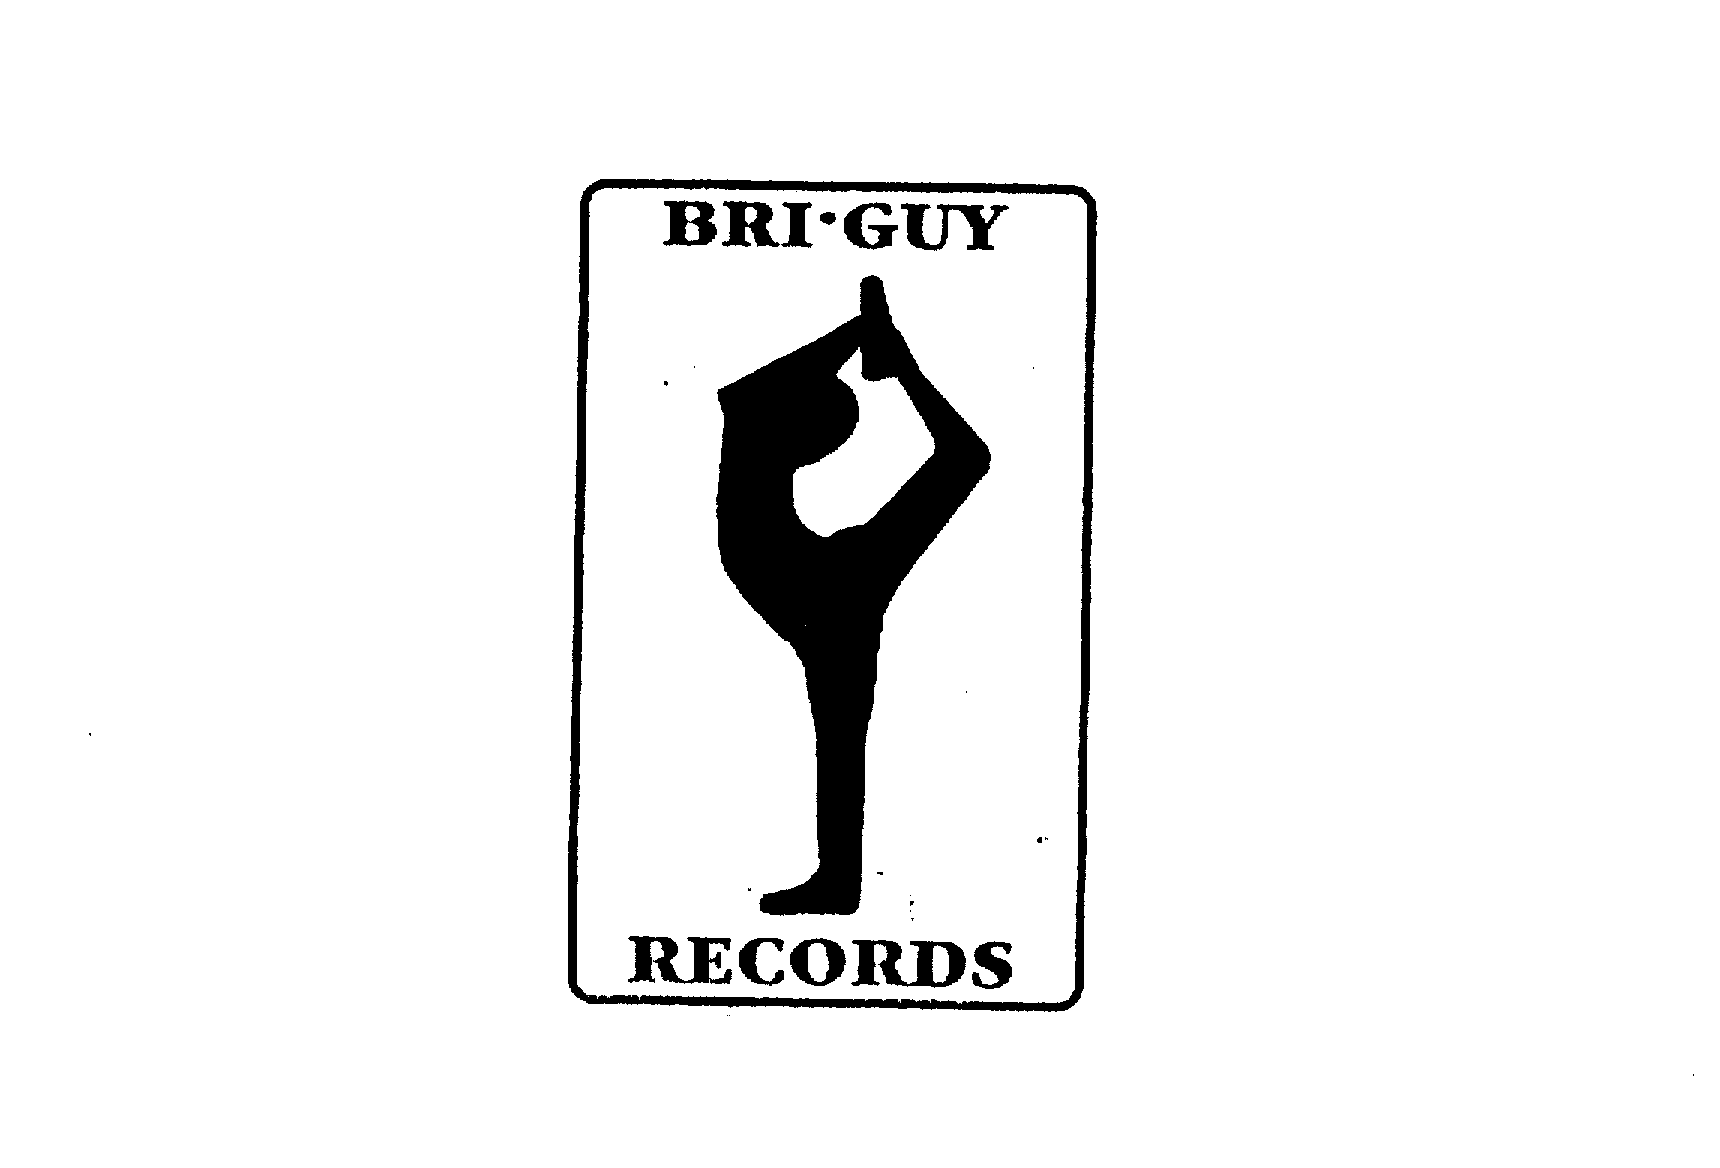 BRI-GUY RECORDS